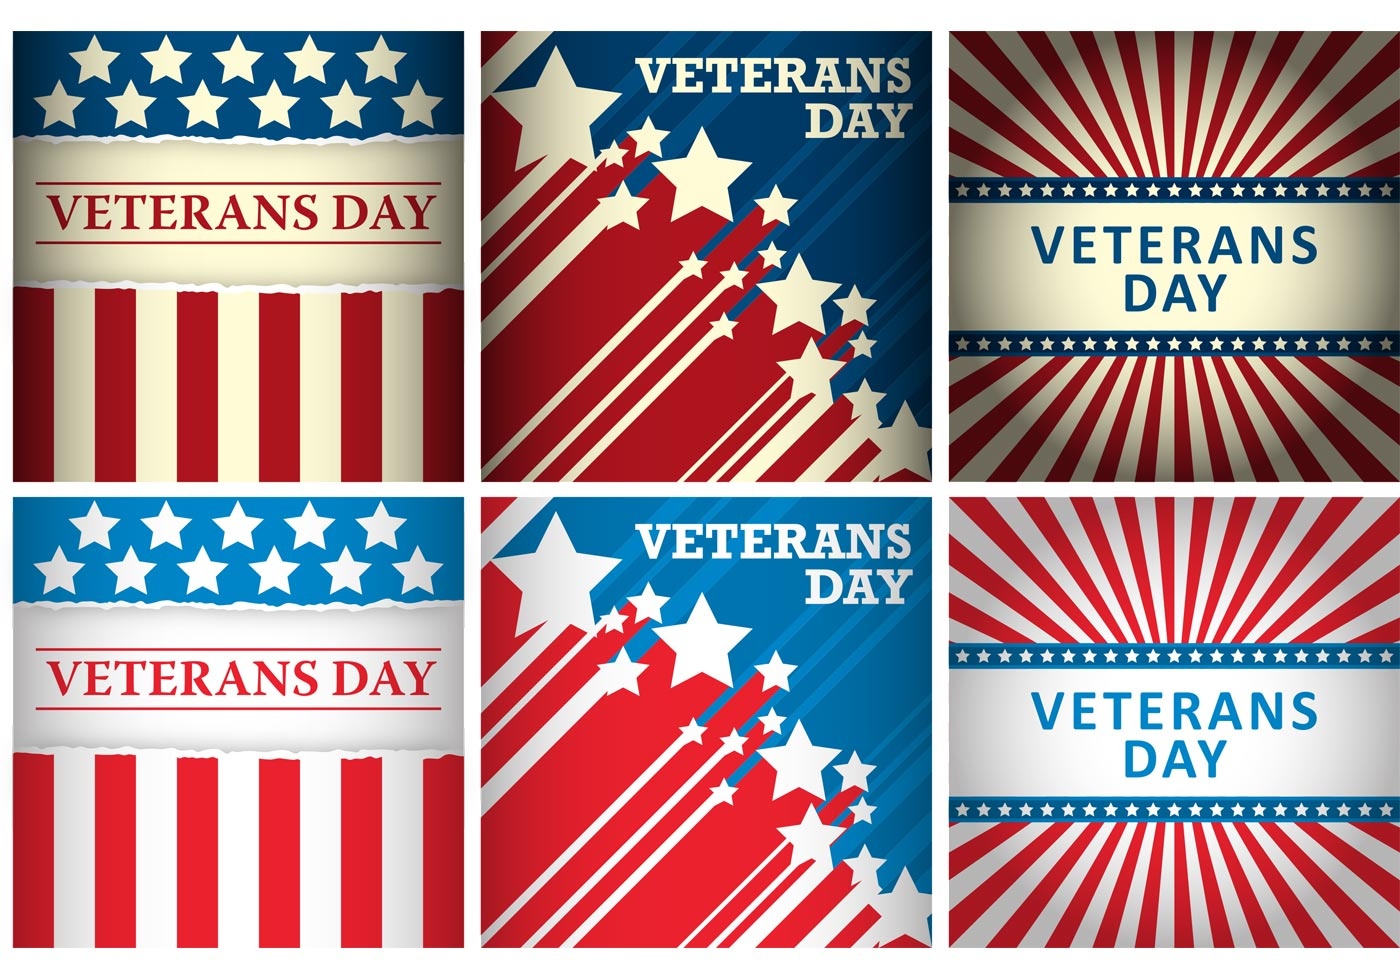 Veterans Day Free Printable Cards Free Printable